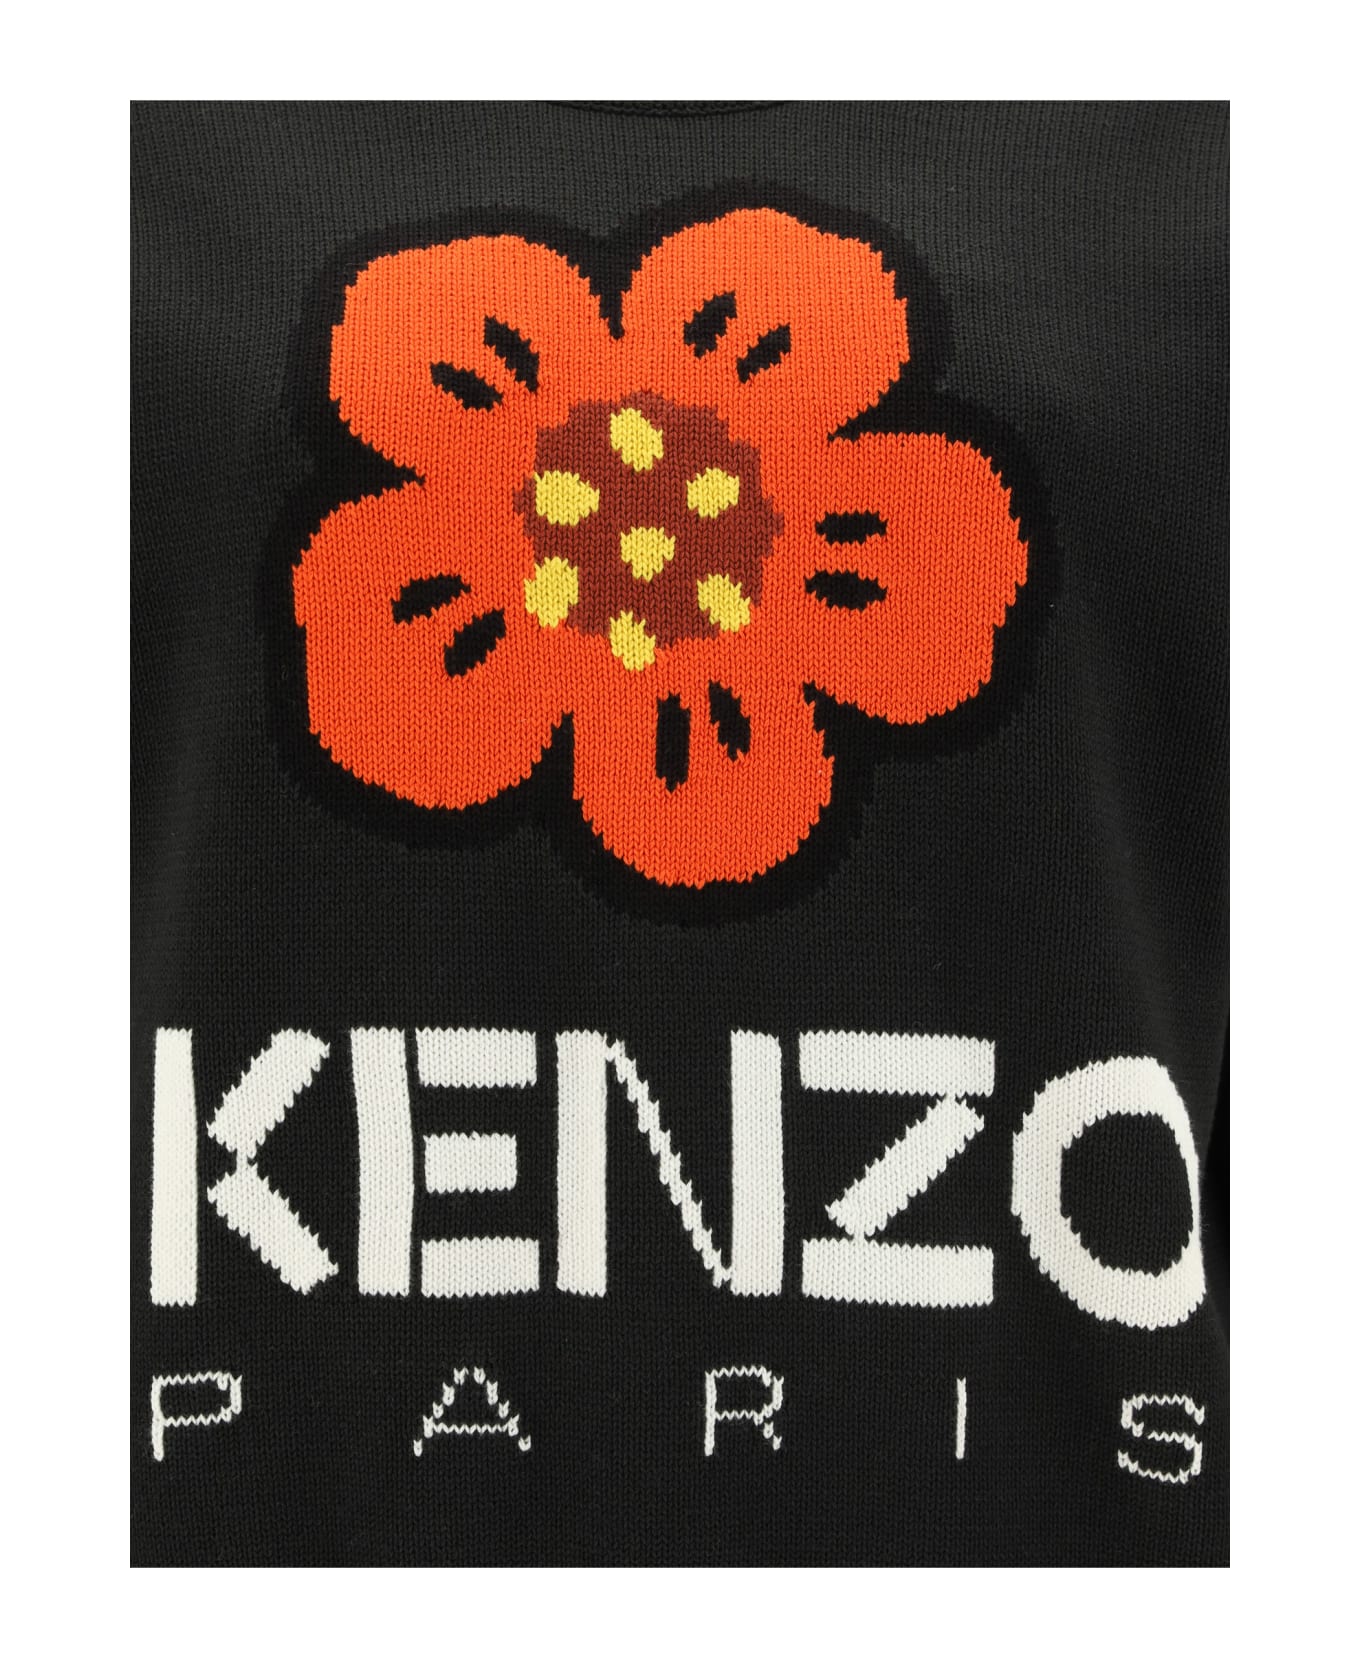 Kenzo Cotton Crew-neck Sweater - BLACK フリース